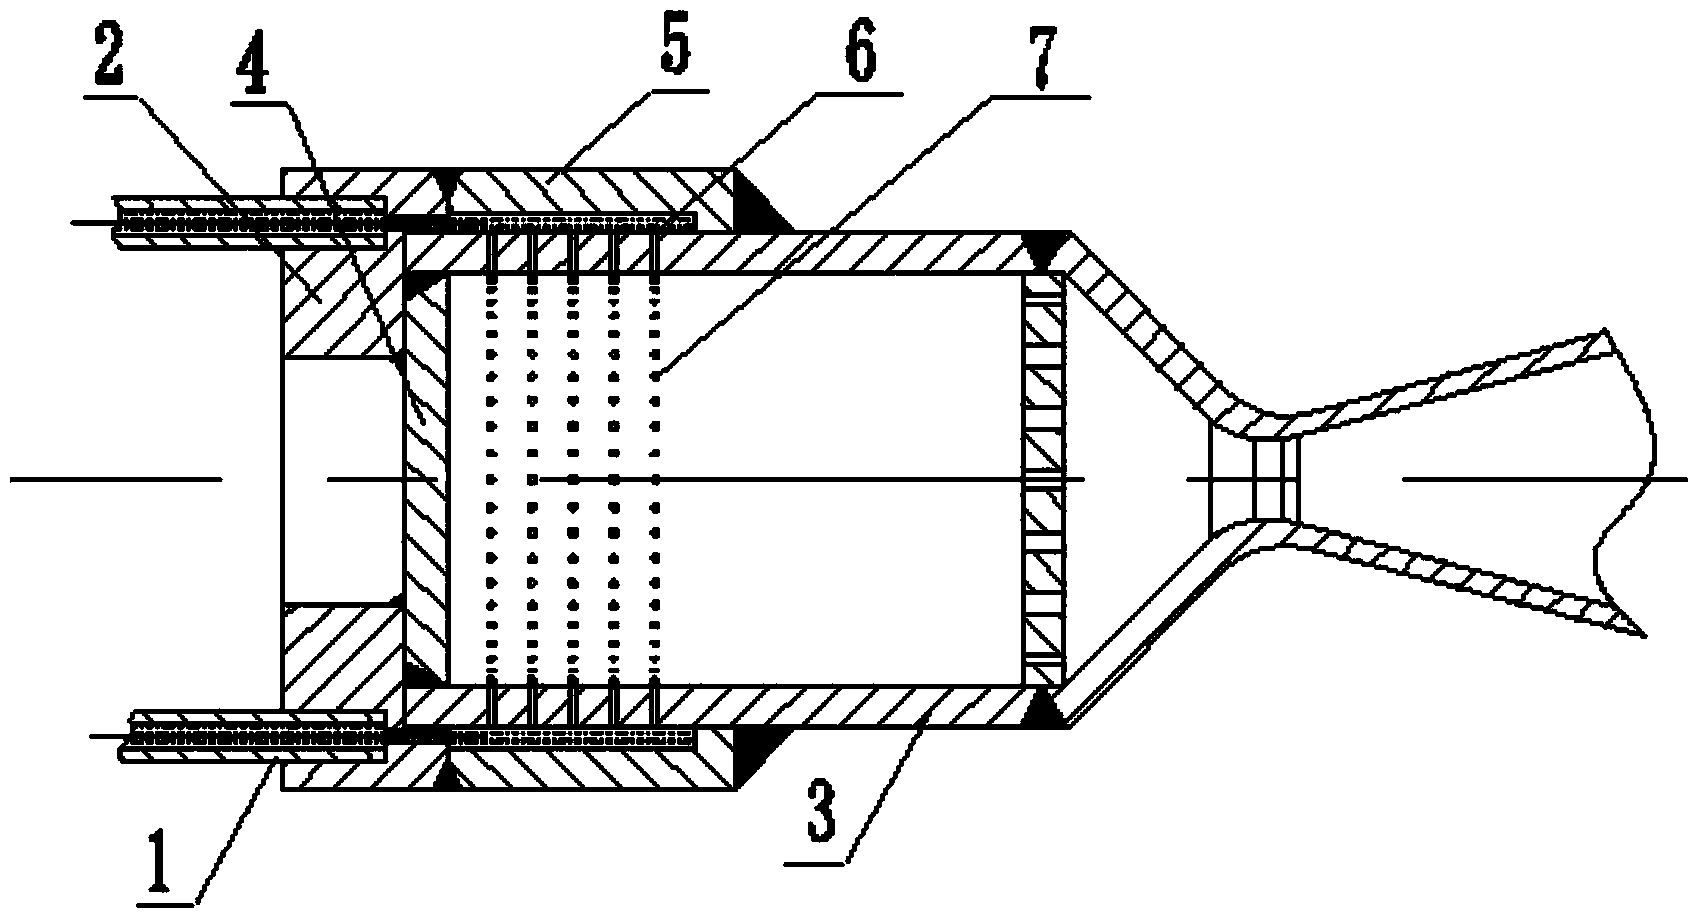 Thrust chamber injector of hydrazine type low-thrust single-unit engine